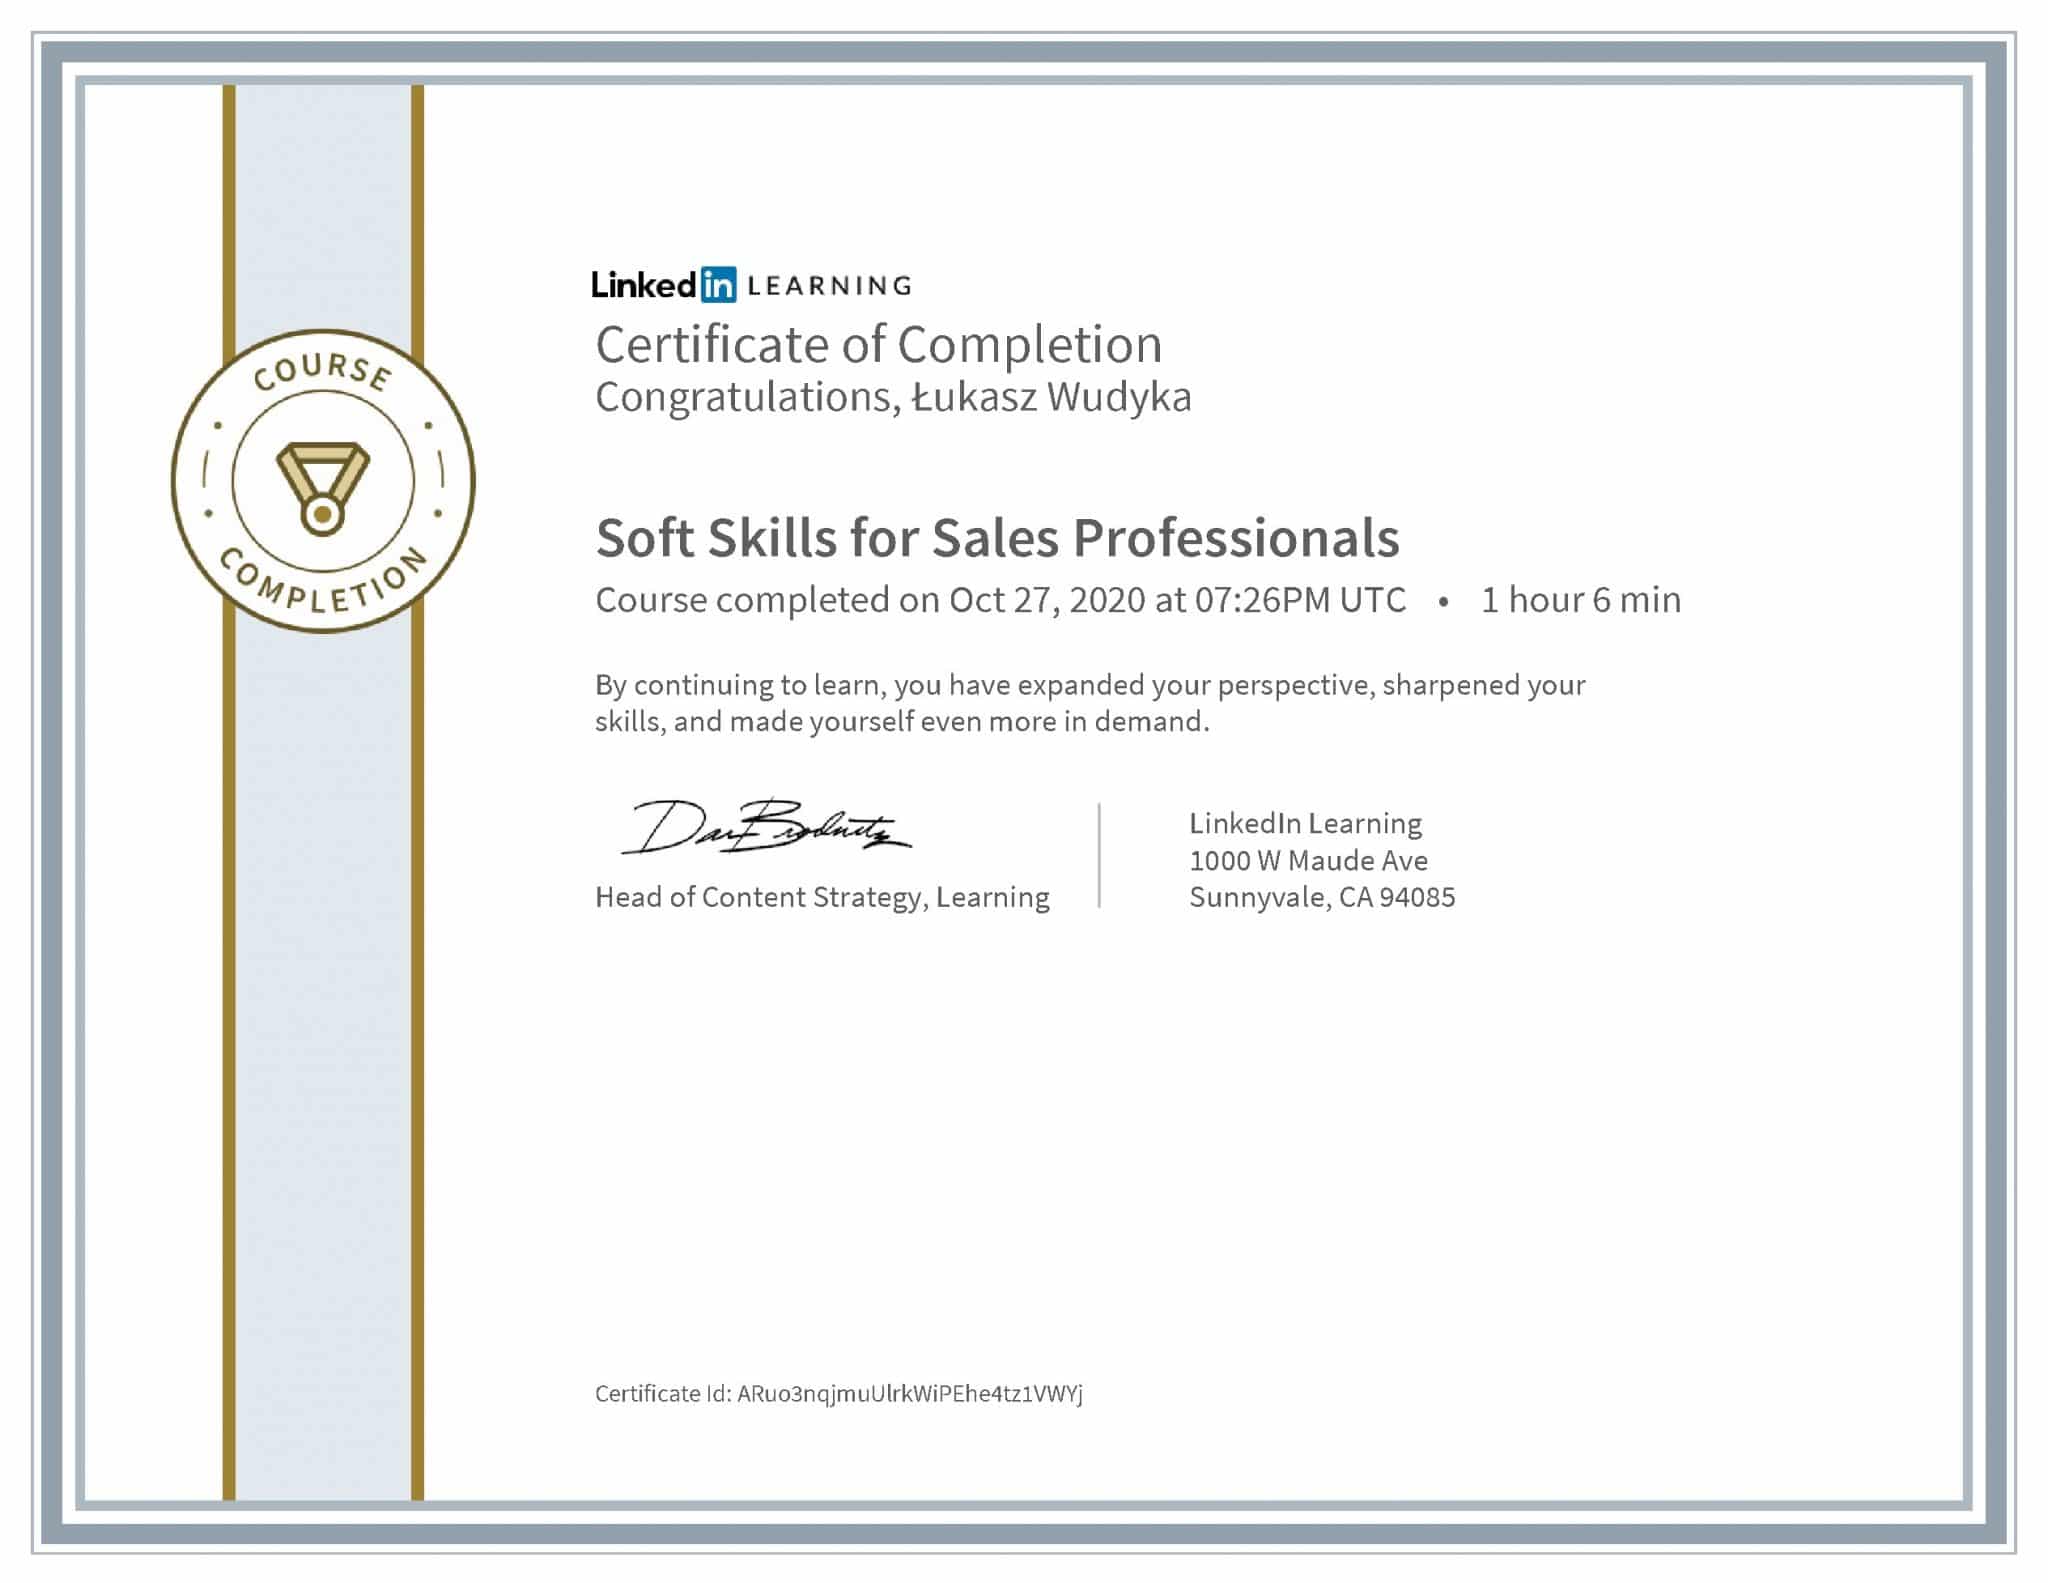 Łukasz Wudyka certyfikat LinkedIn Soft Skills for Sales Professionals